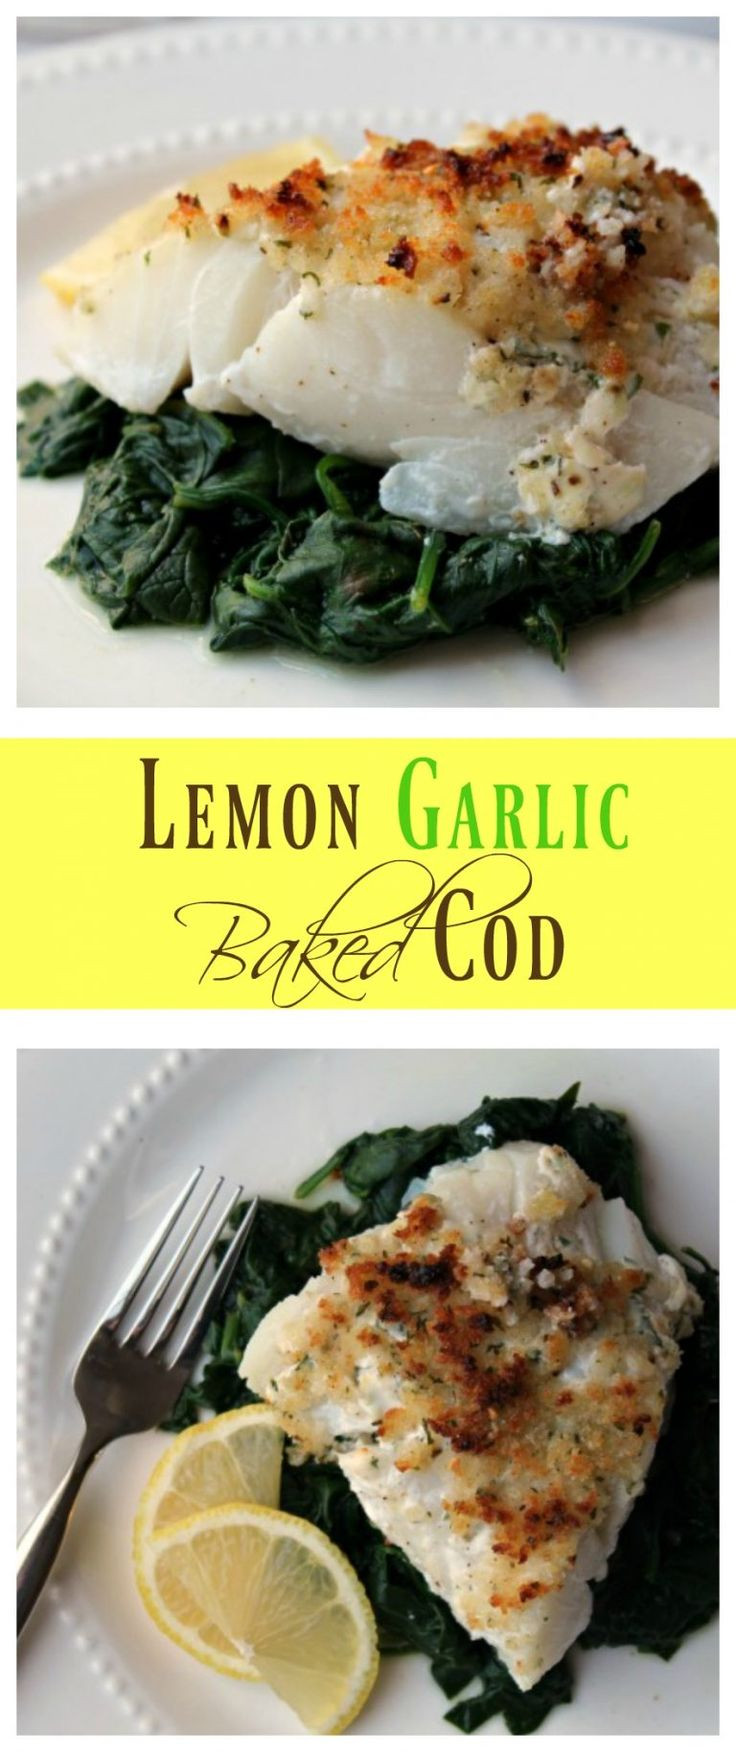 Low Fat Cod Recipes
 Best 25 Baked fish ideas on Pinterest